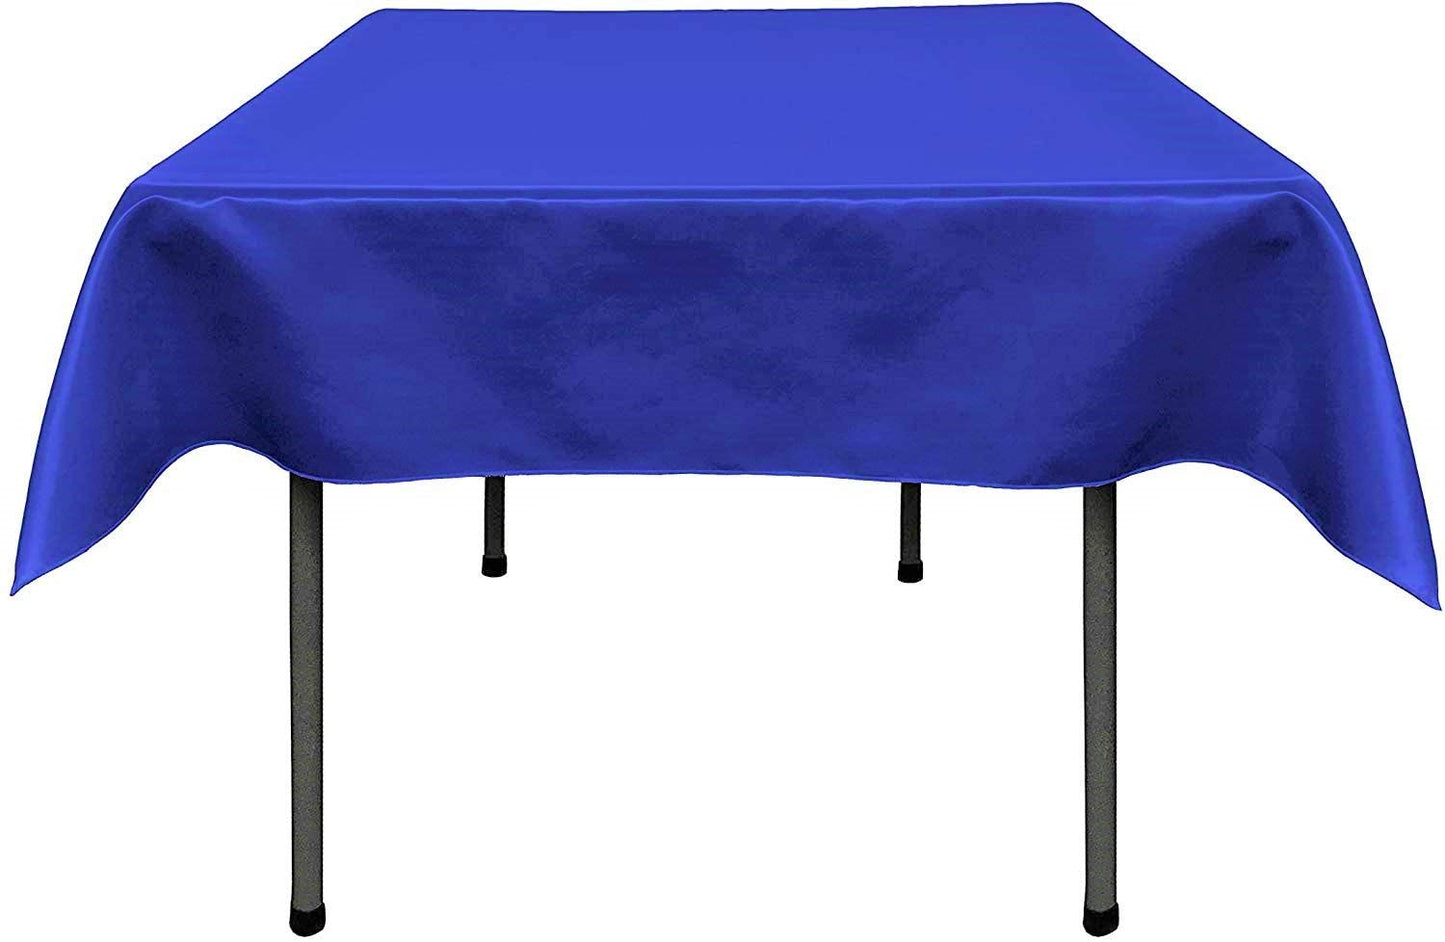 Polyester Bridal Satin Table Tablecloth (Royal Blue,